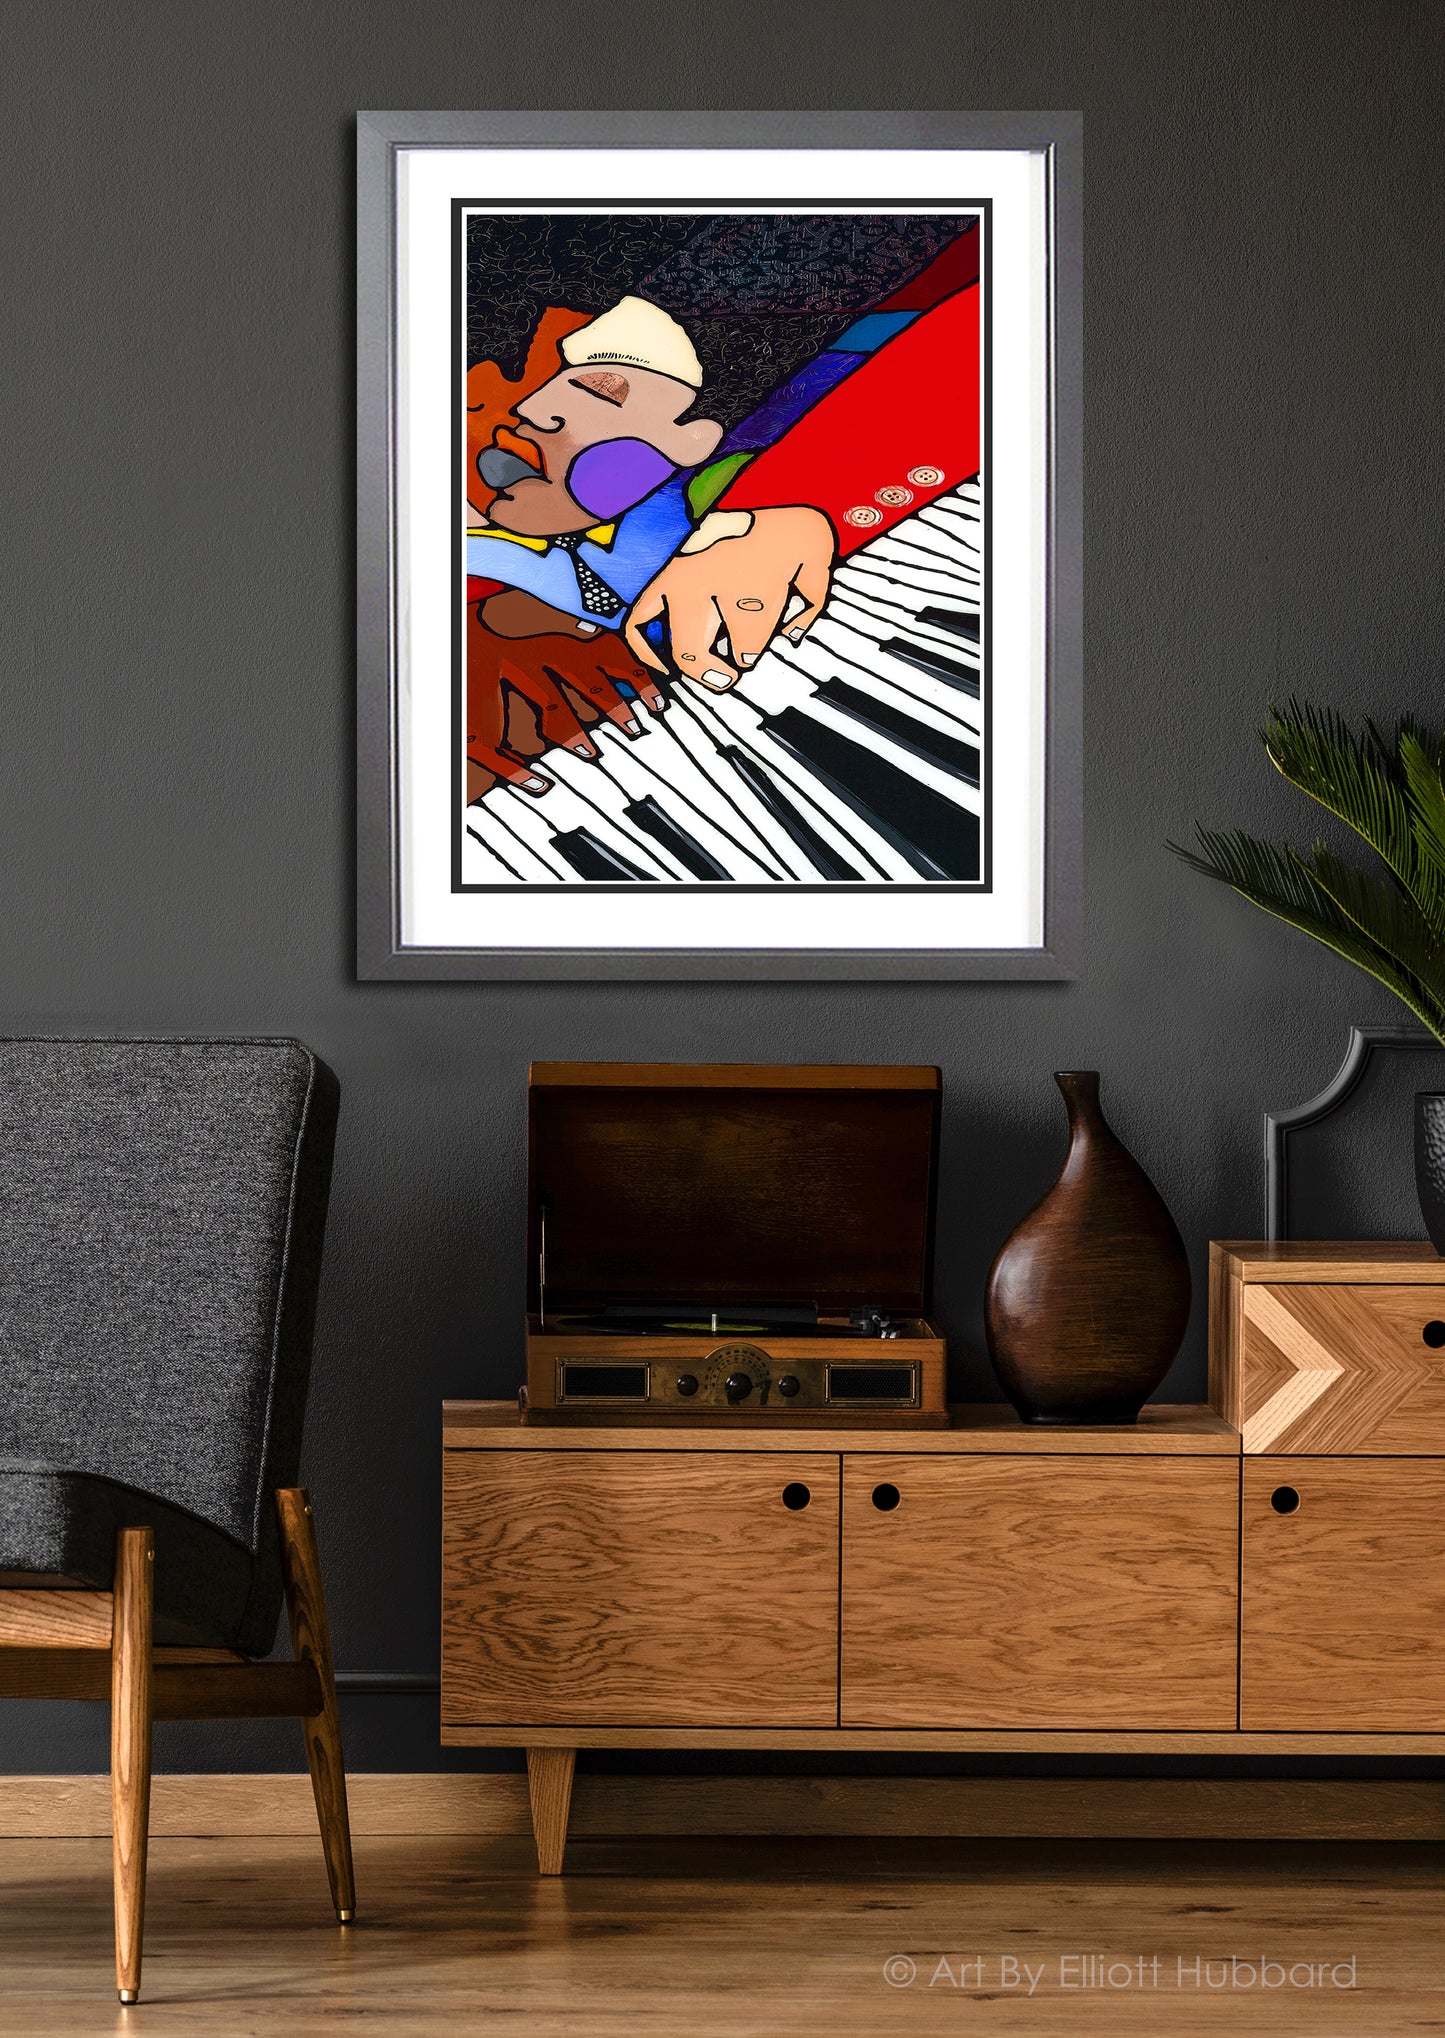 "Mr. Piano Man"